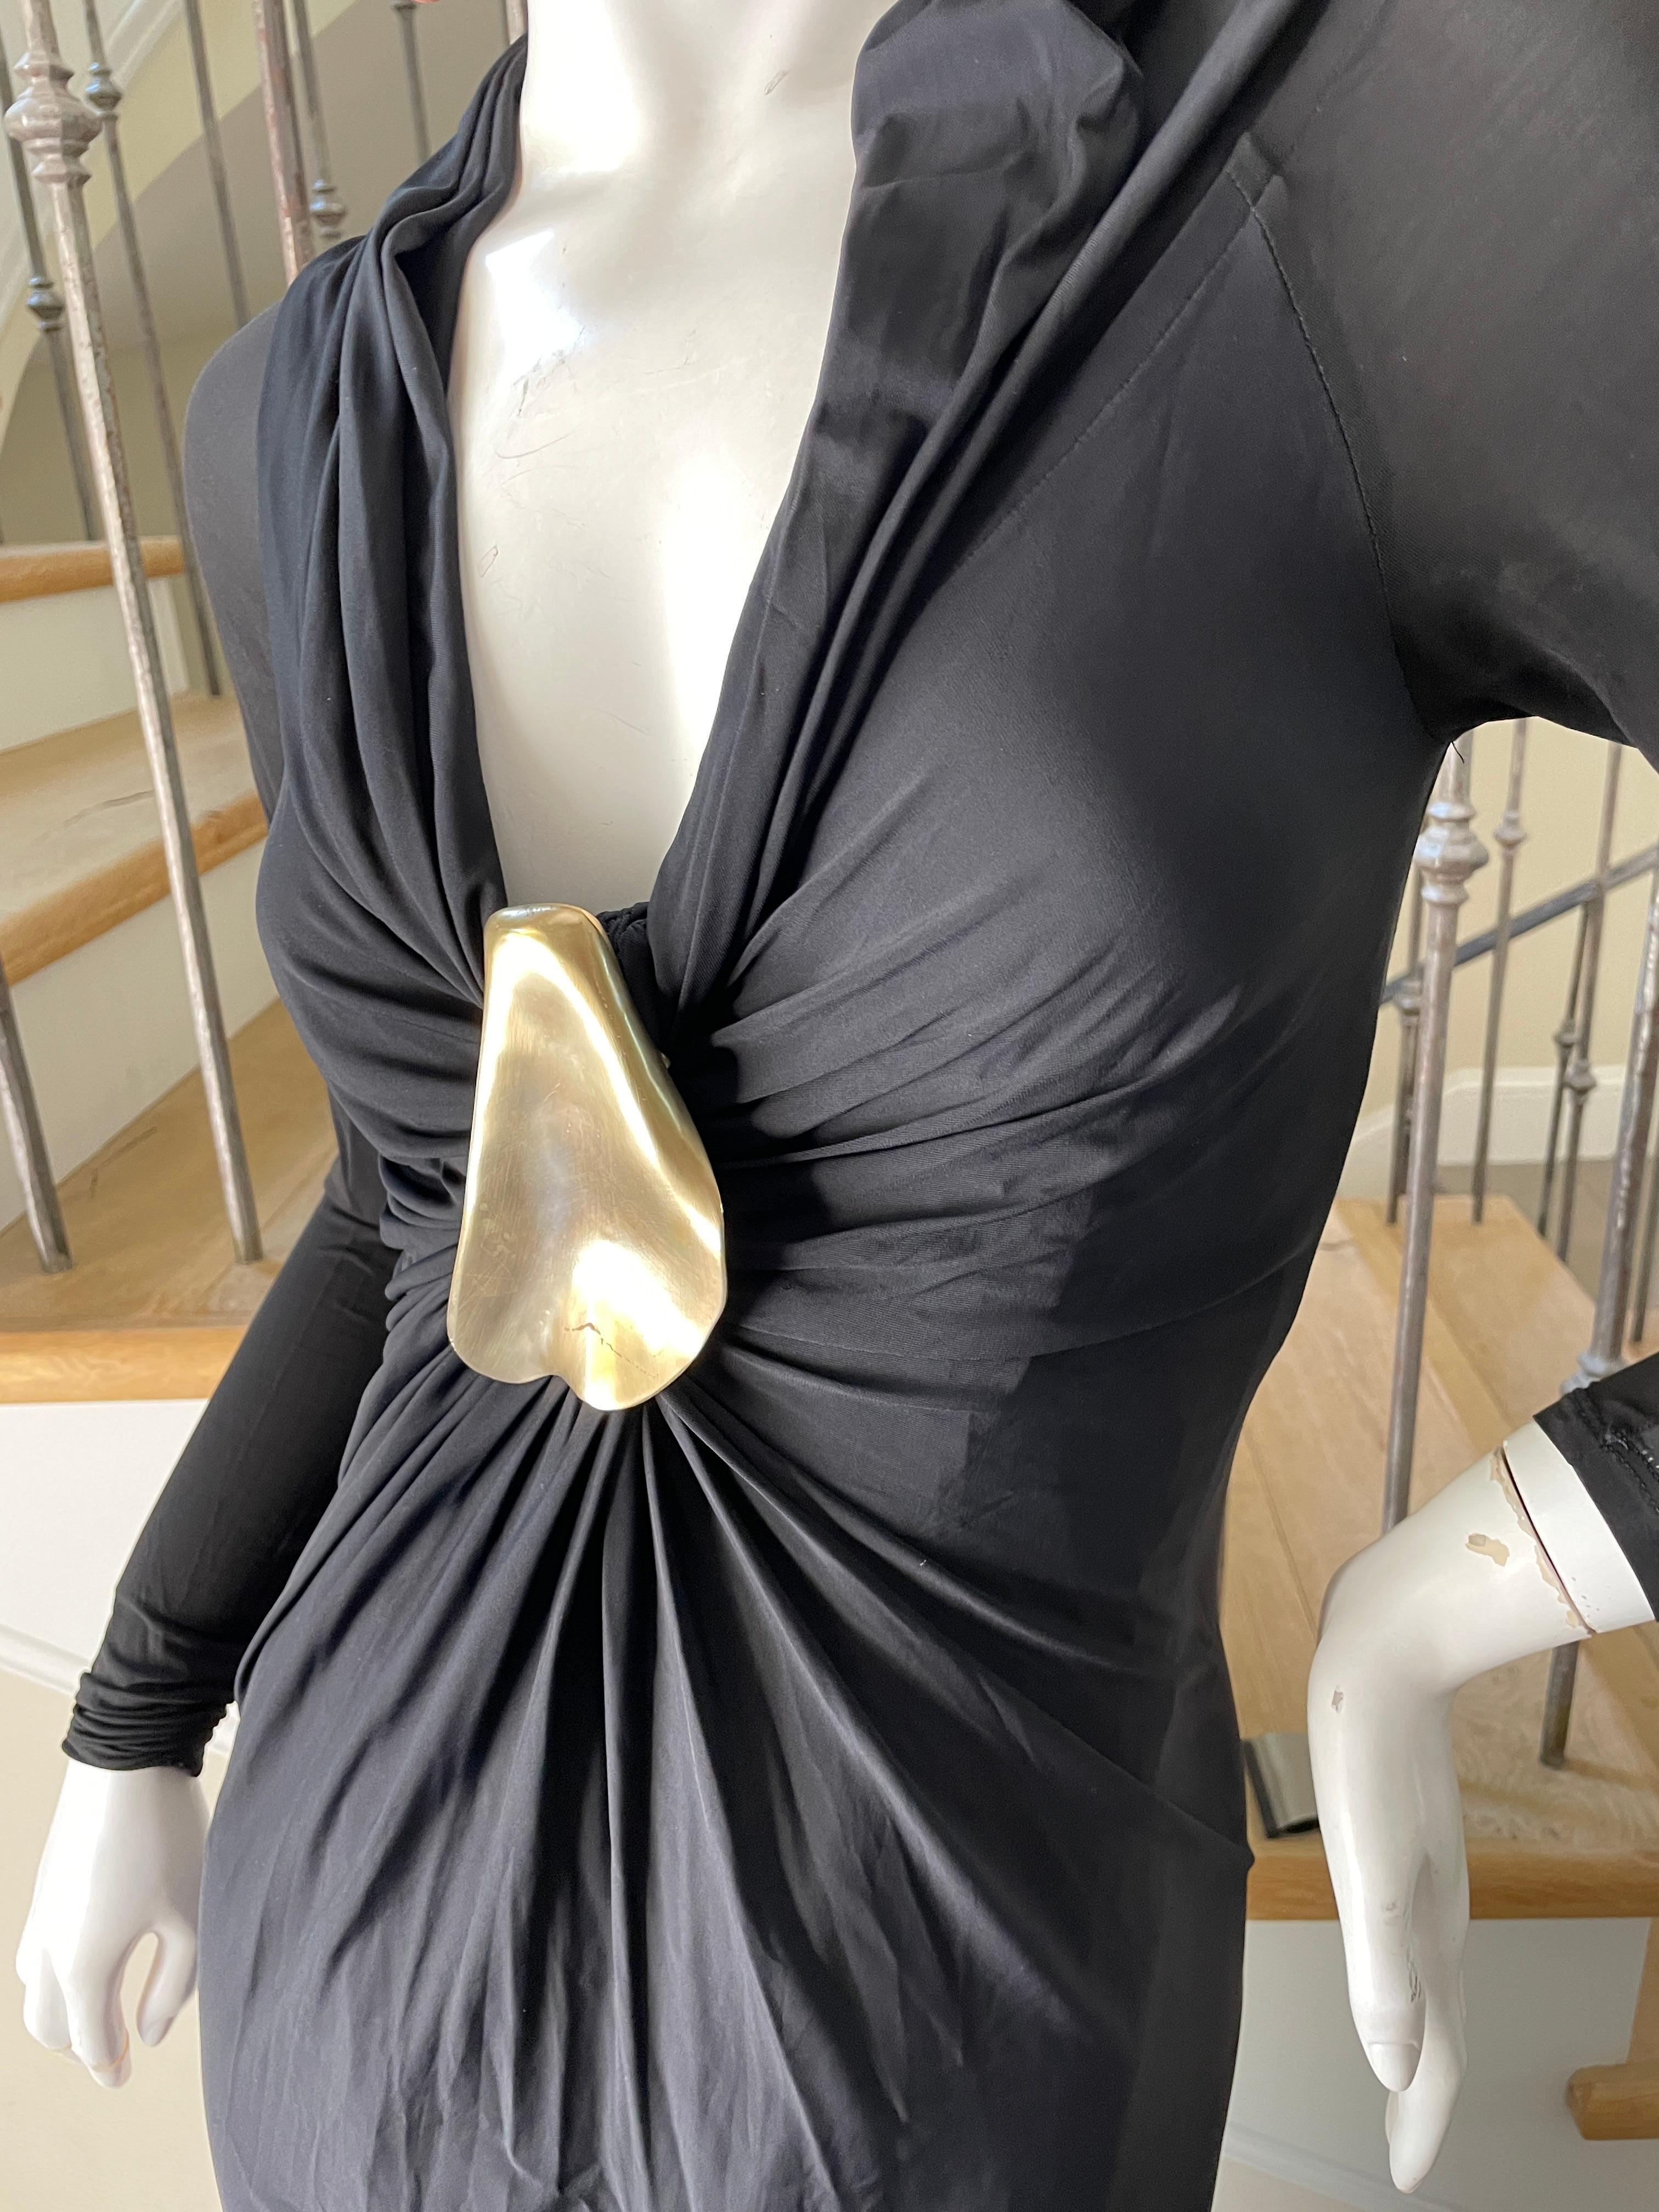 Donna Karan Vintage Black Dress w Plunging Neckline & Robert Lee Morris Ornament.
This is so pretty.
Size M
Bust 36